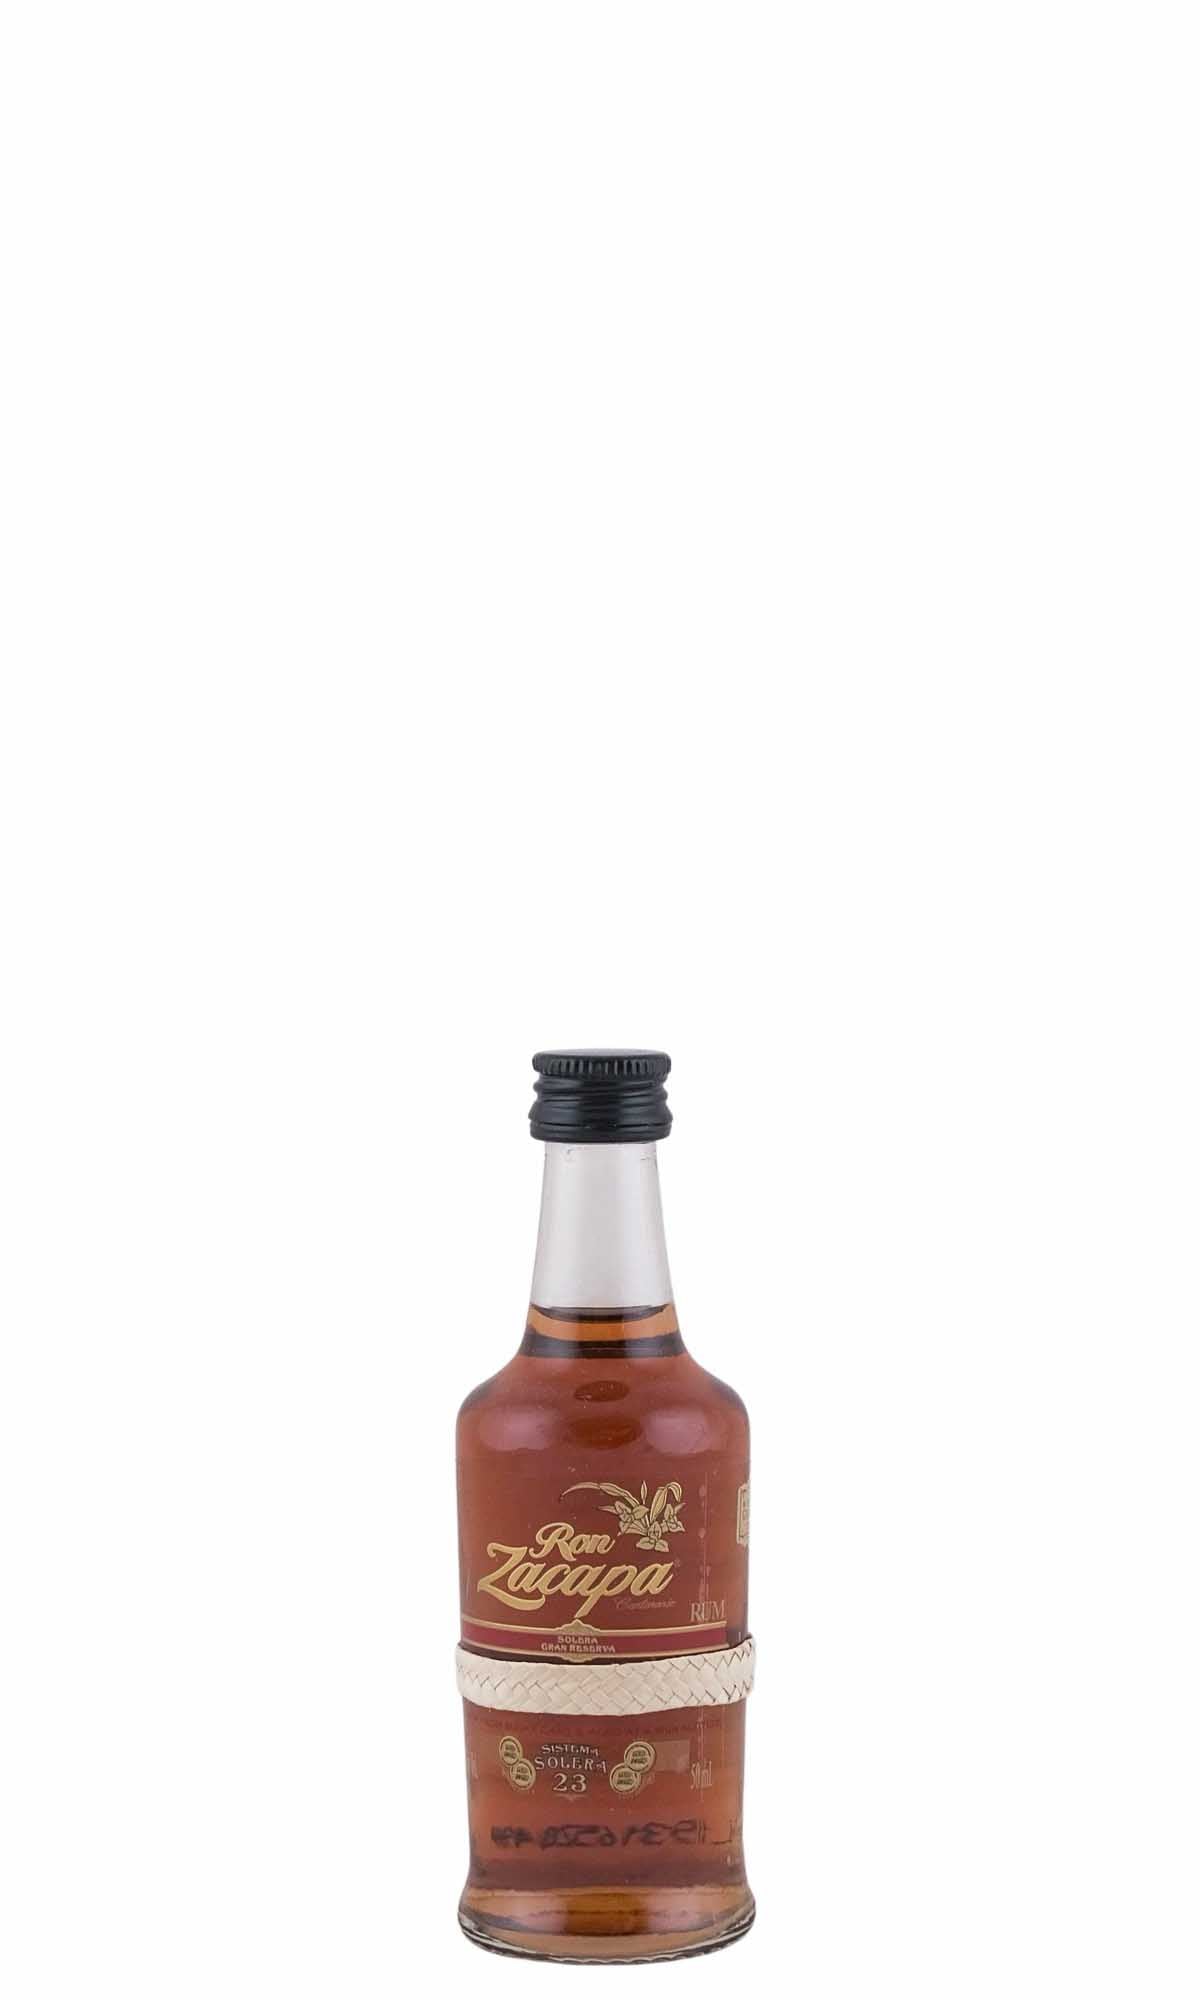 Zacapa XO | Solera Gran Reserva Especial Rum NV / 750 ml.